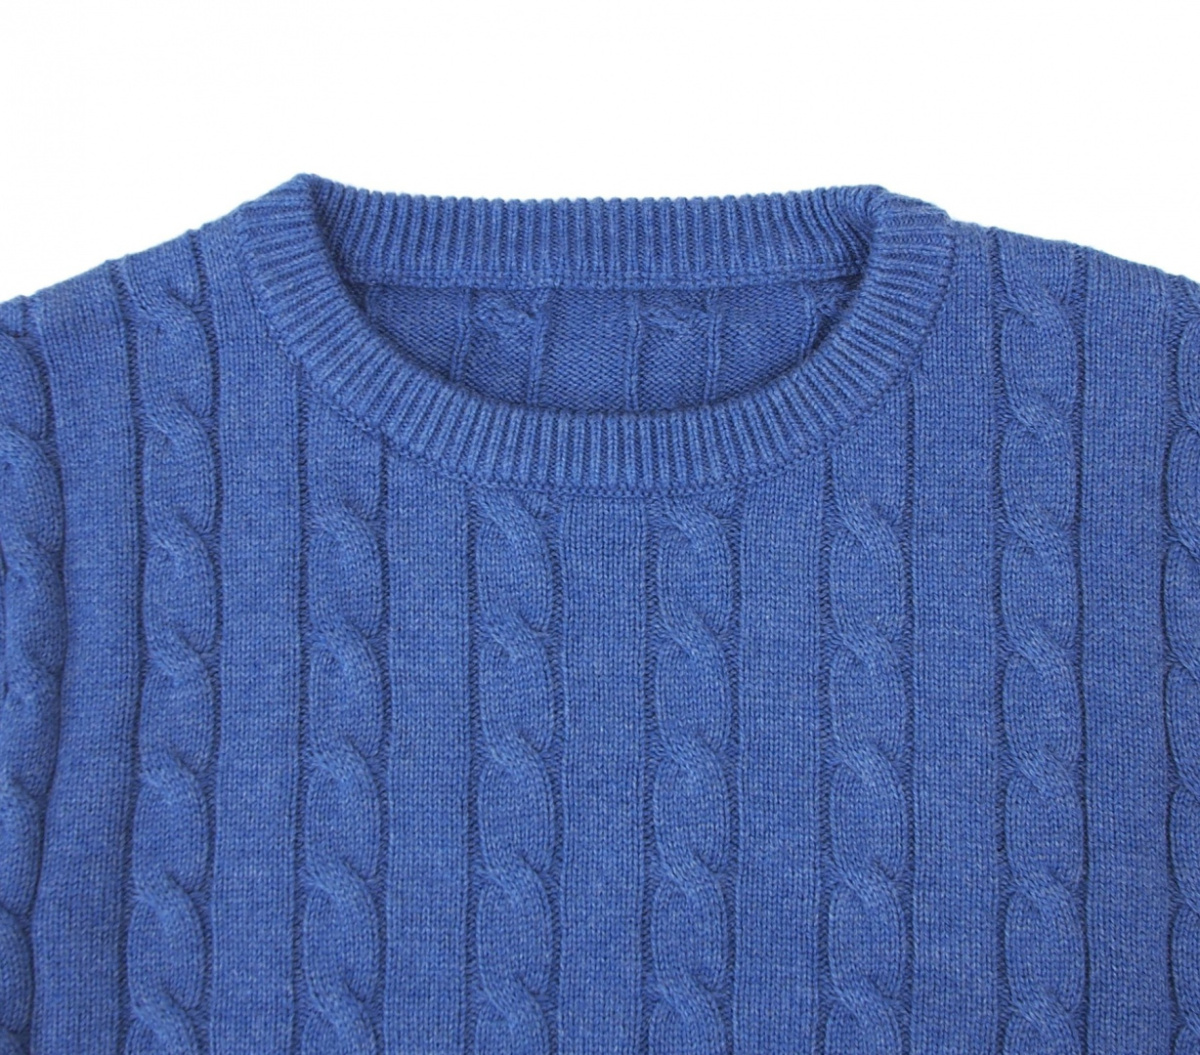 ST-001 Sweater(3)